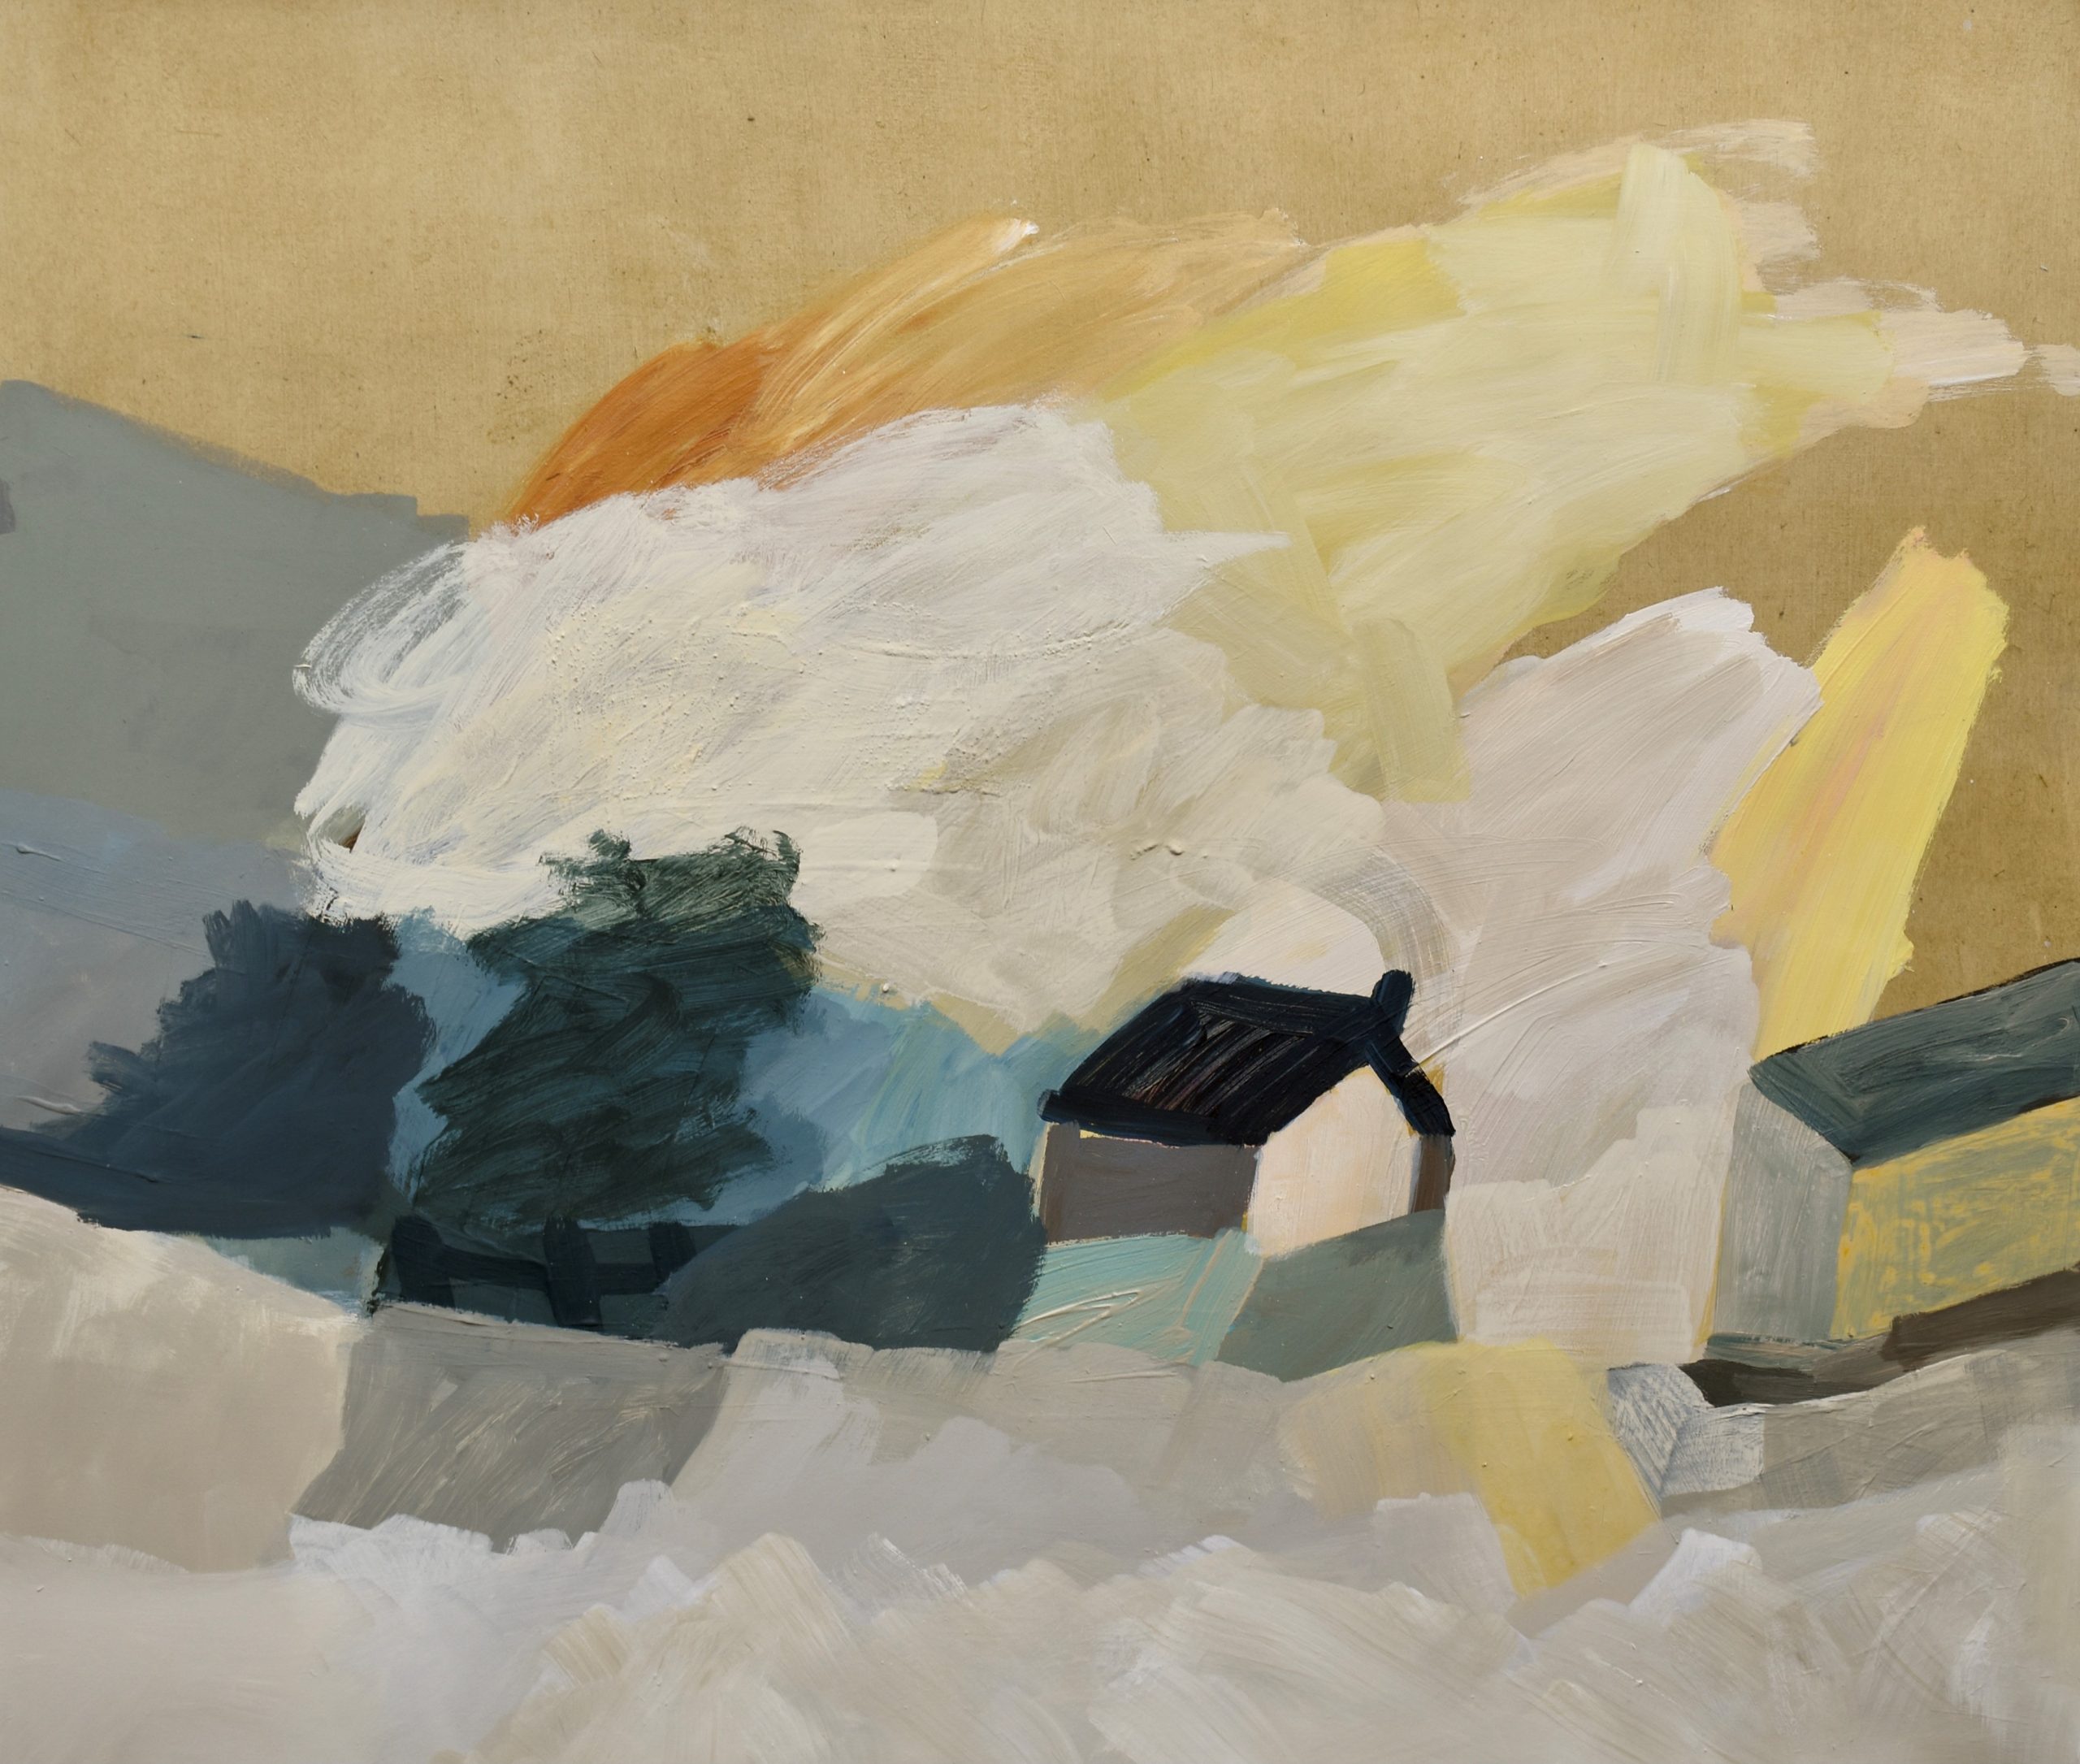 Eleanor Millard 'In The Light of Day' acrylic on Aquarelle paper 114 x 100cm $7,900